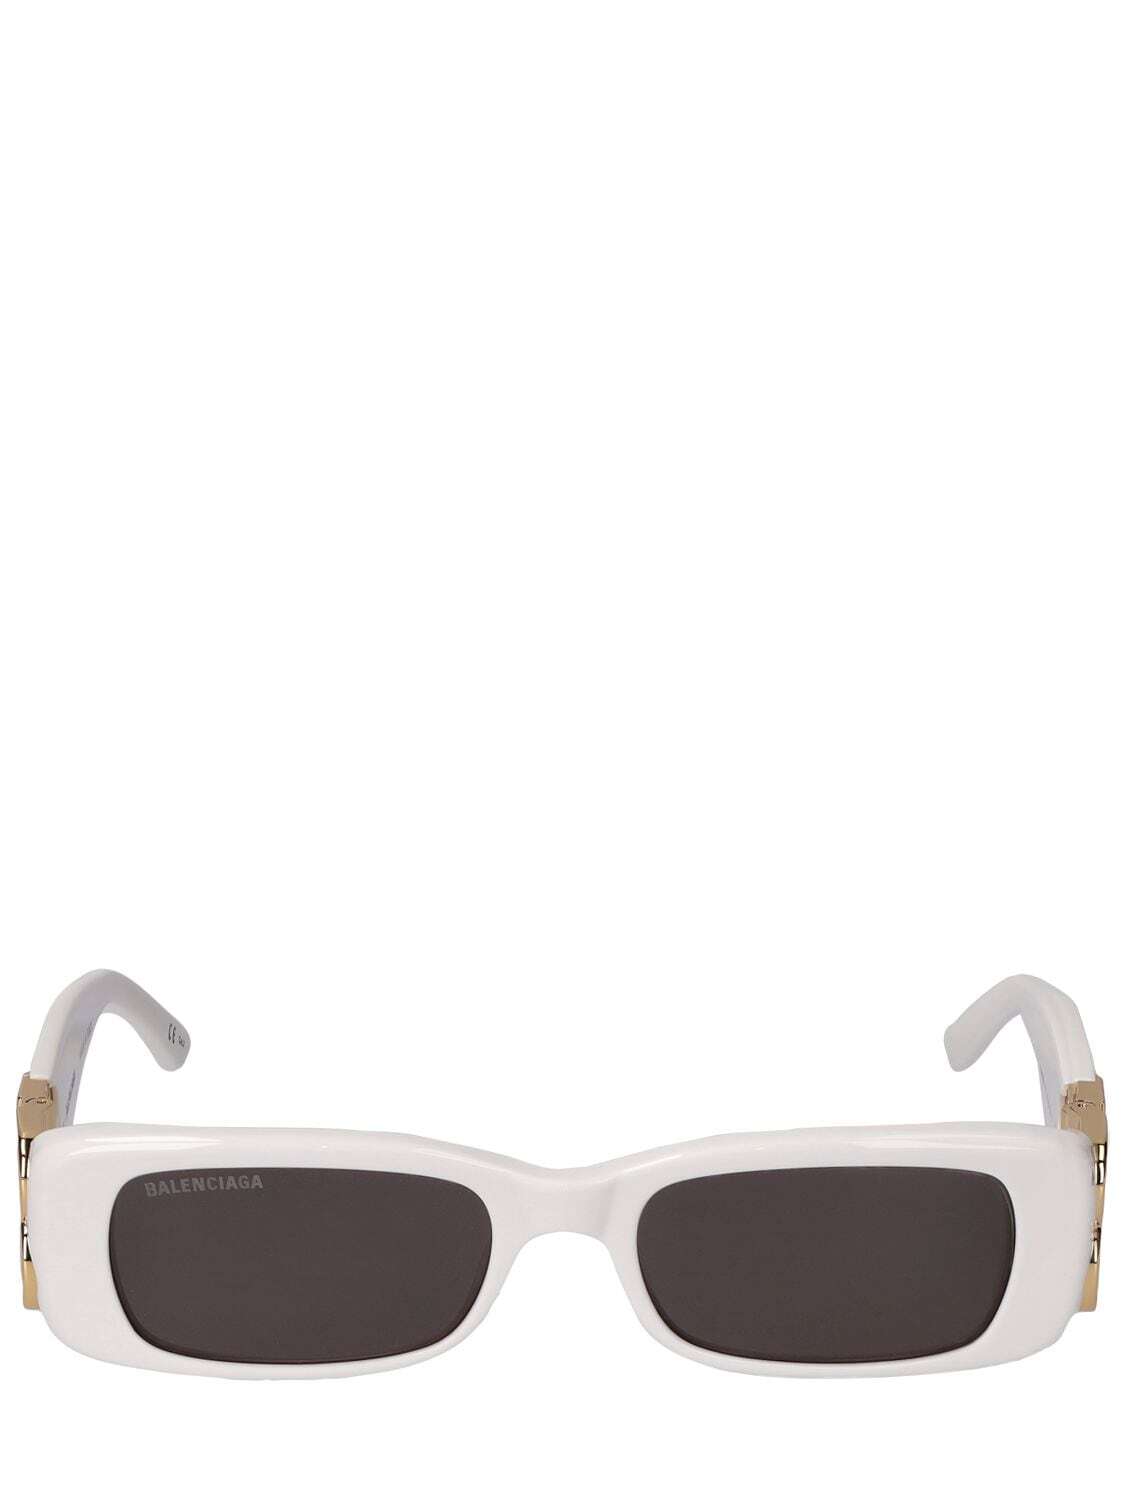 BALENCIAGA 0096s Dynasty Acetate Sunglasses in white